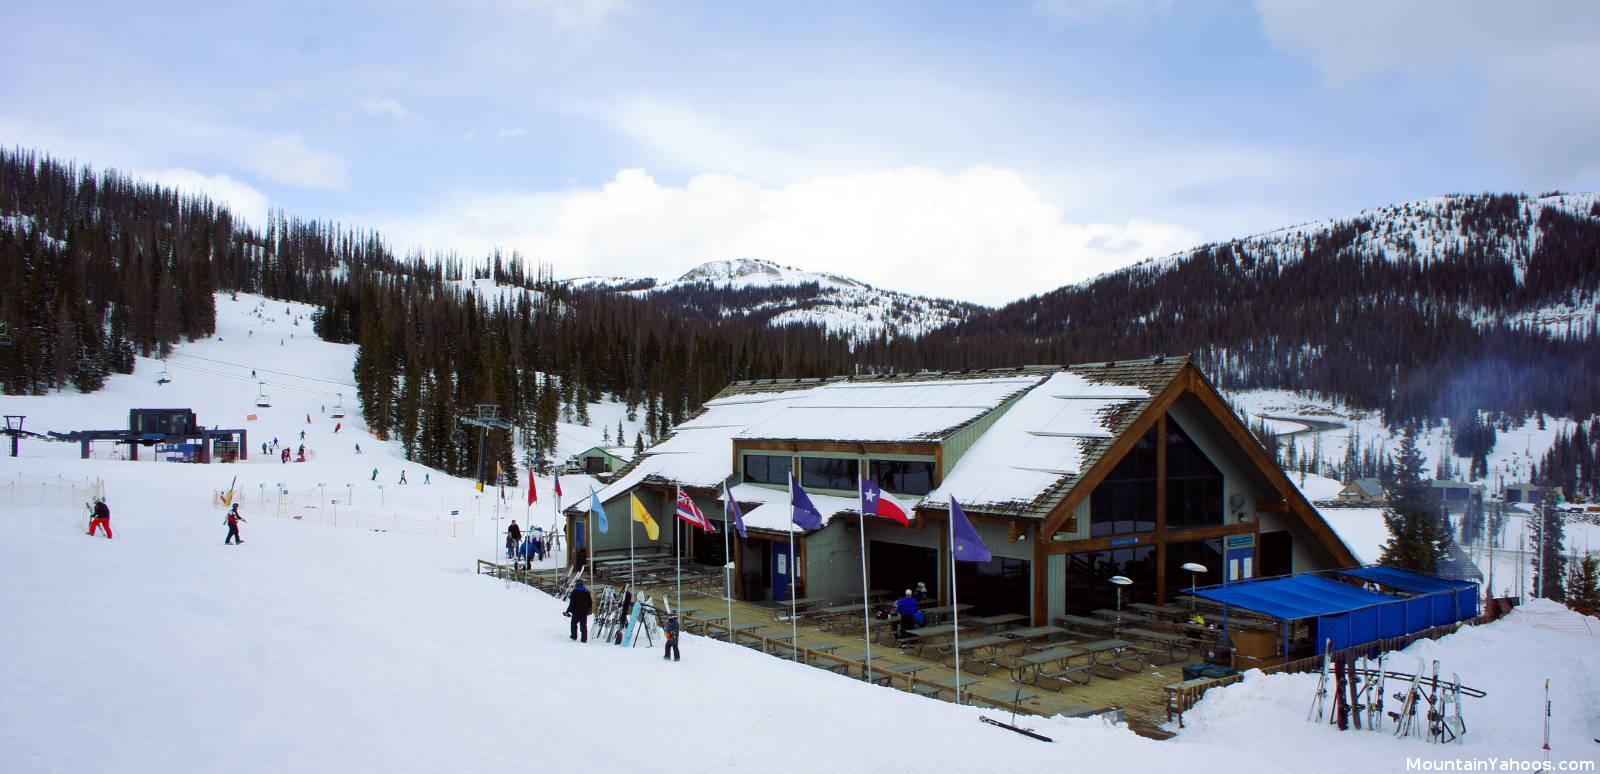 Wolf Creek Ski Area